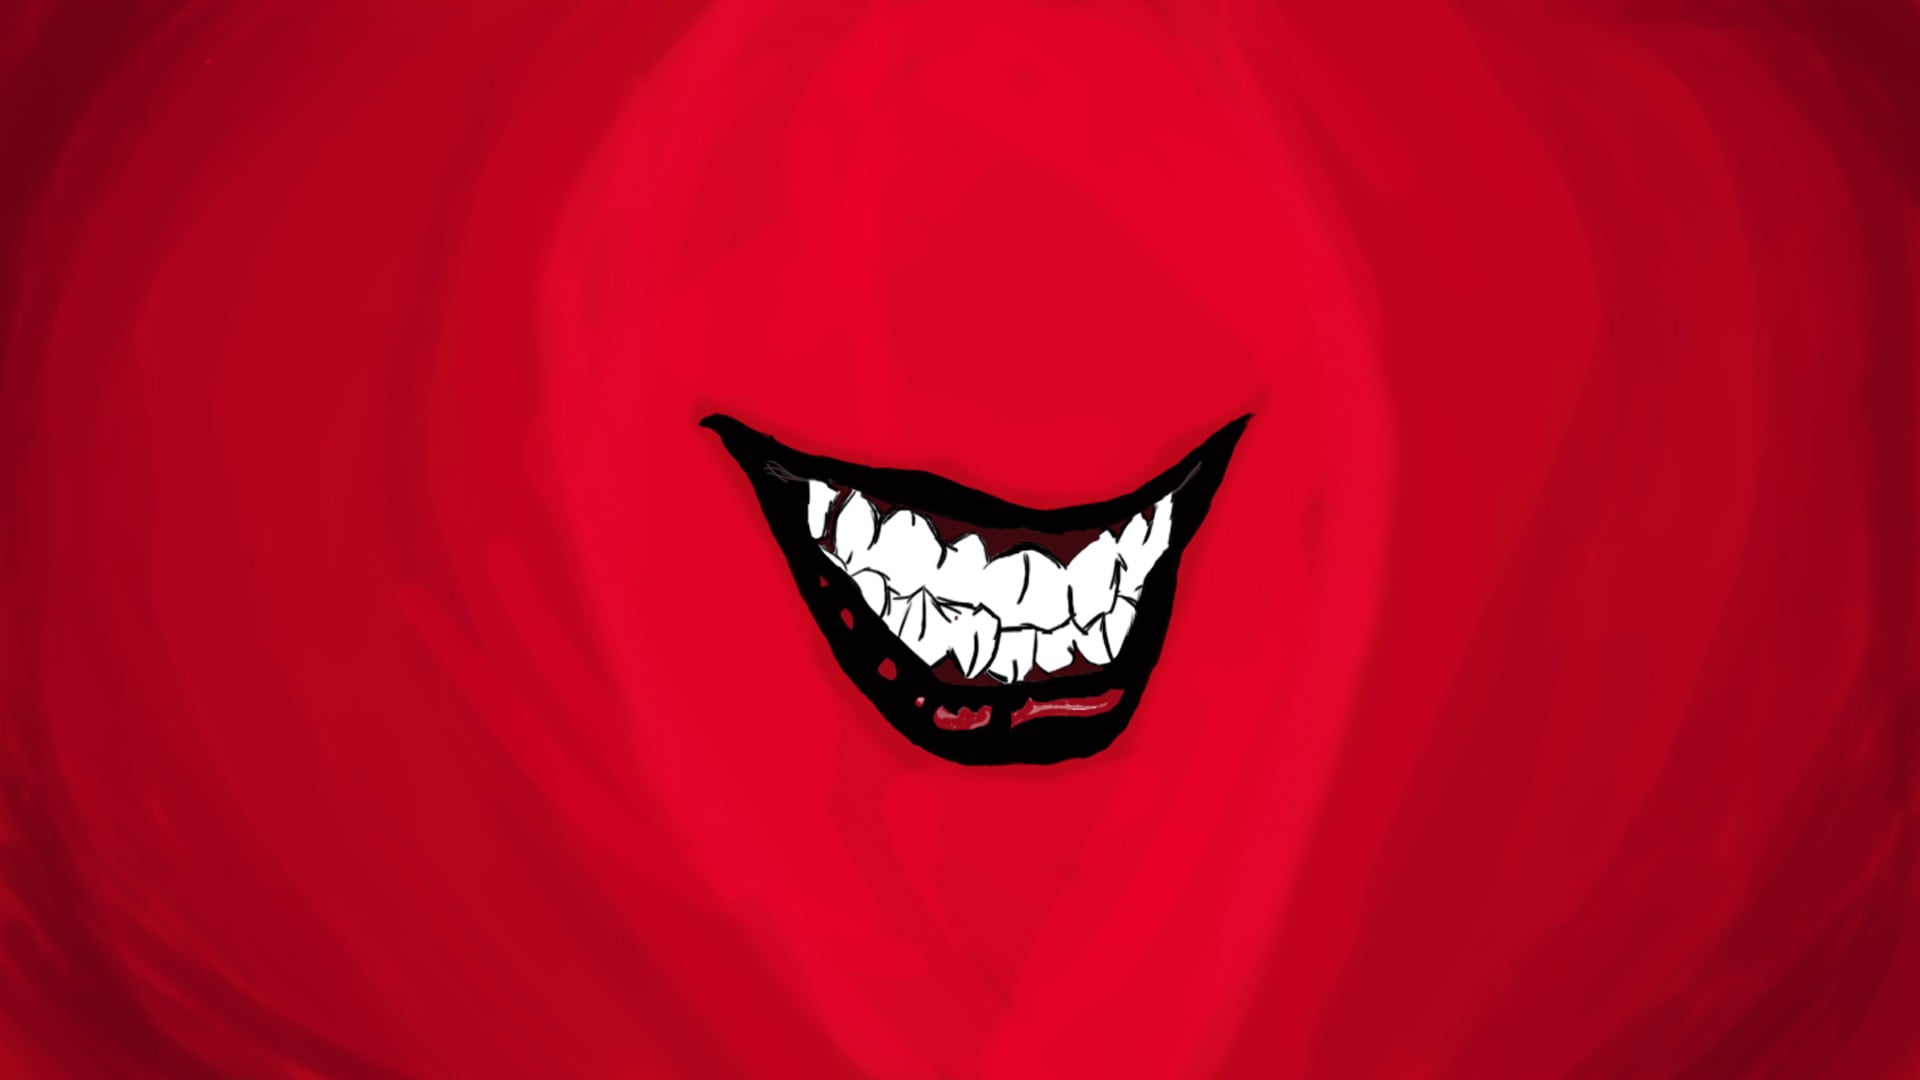 red, white, and black smiling teeth illustration, Joker, mouth, Heath Ledger